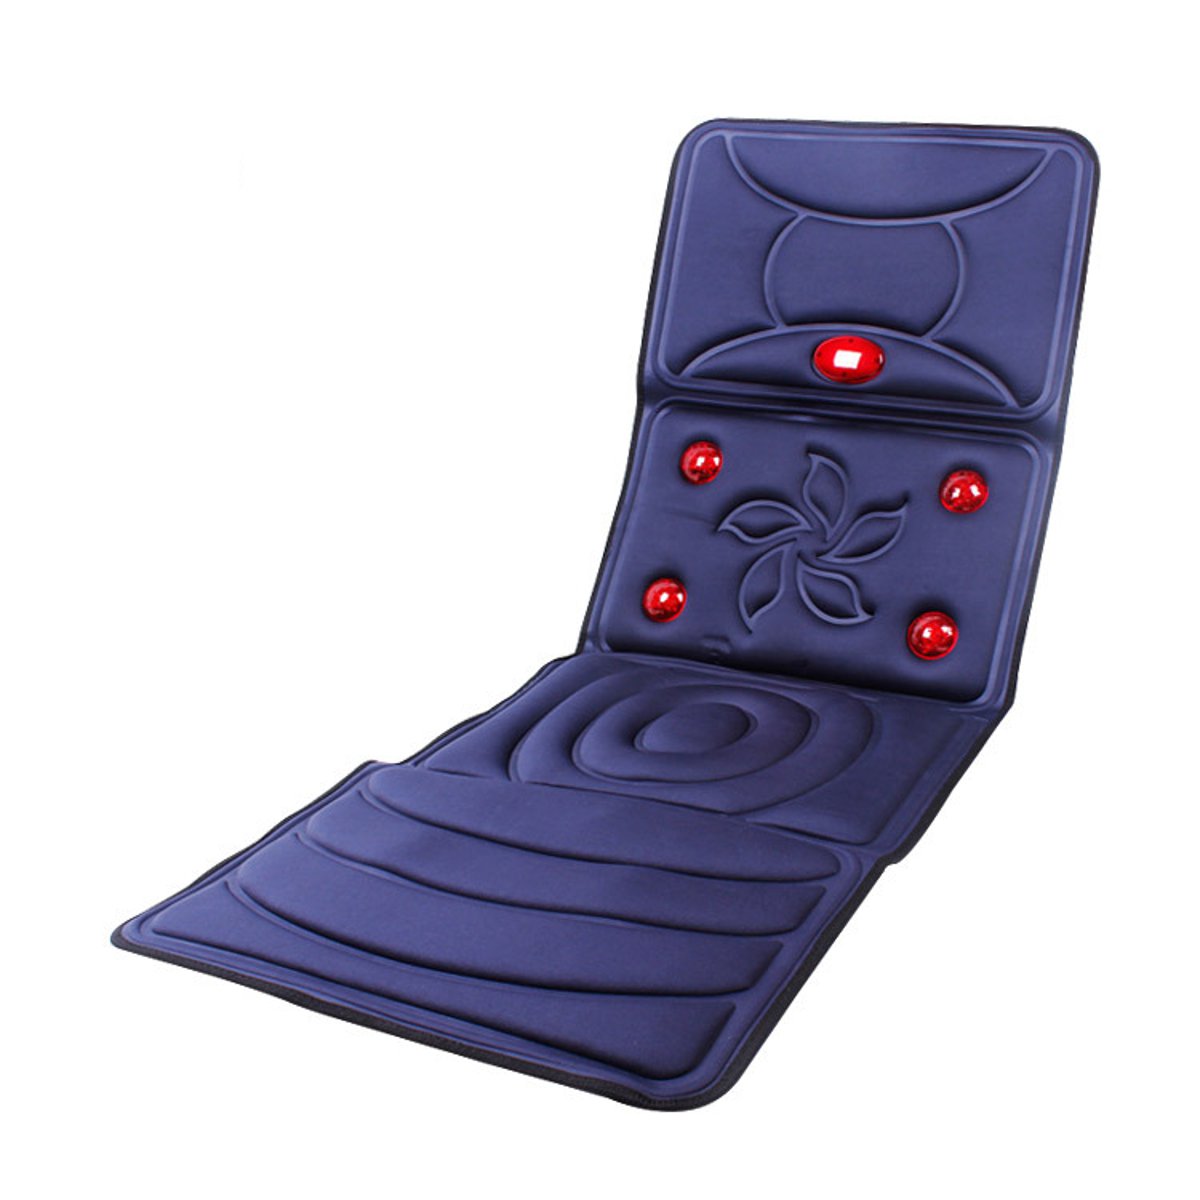 Infrared-Heating-Full-Body-Massage-Cushion-Heated-Therapy-Back-Massage-Chair-Cushion-Full-Body-Renmo-1938389-9